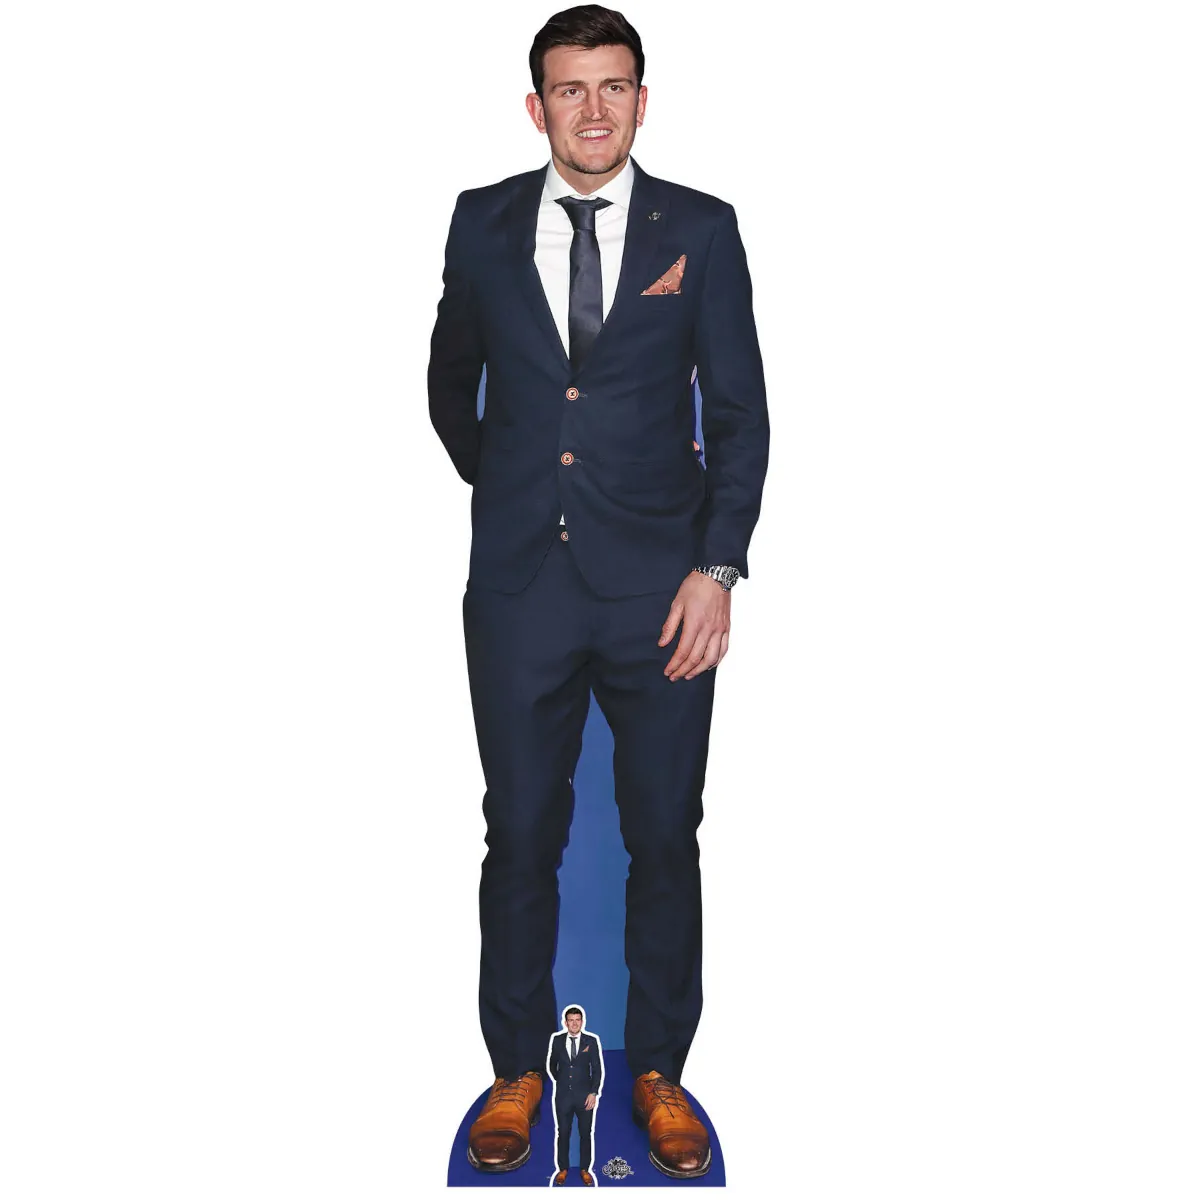 CS1046 Harry Maguire 'Blue Suit' (English Footballer) Lifesize + Mini Cardboard Cutout Standee Front